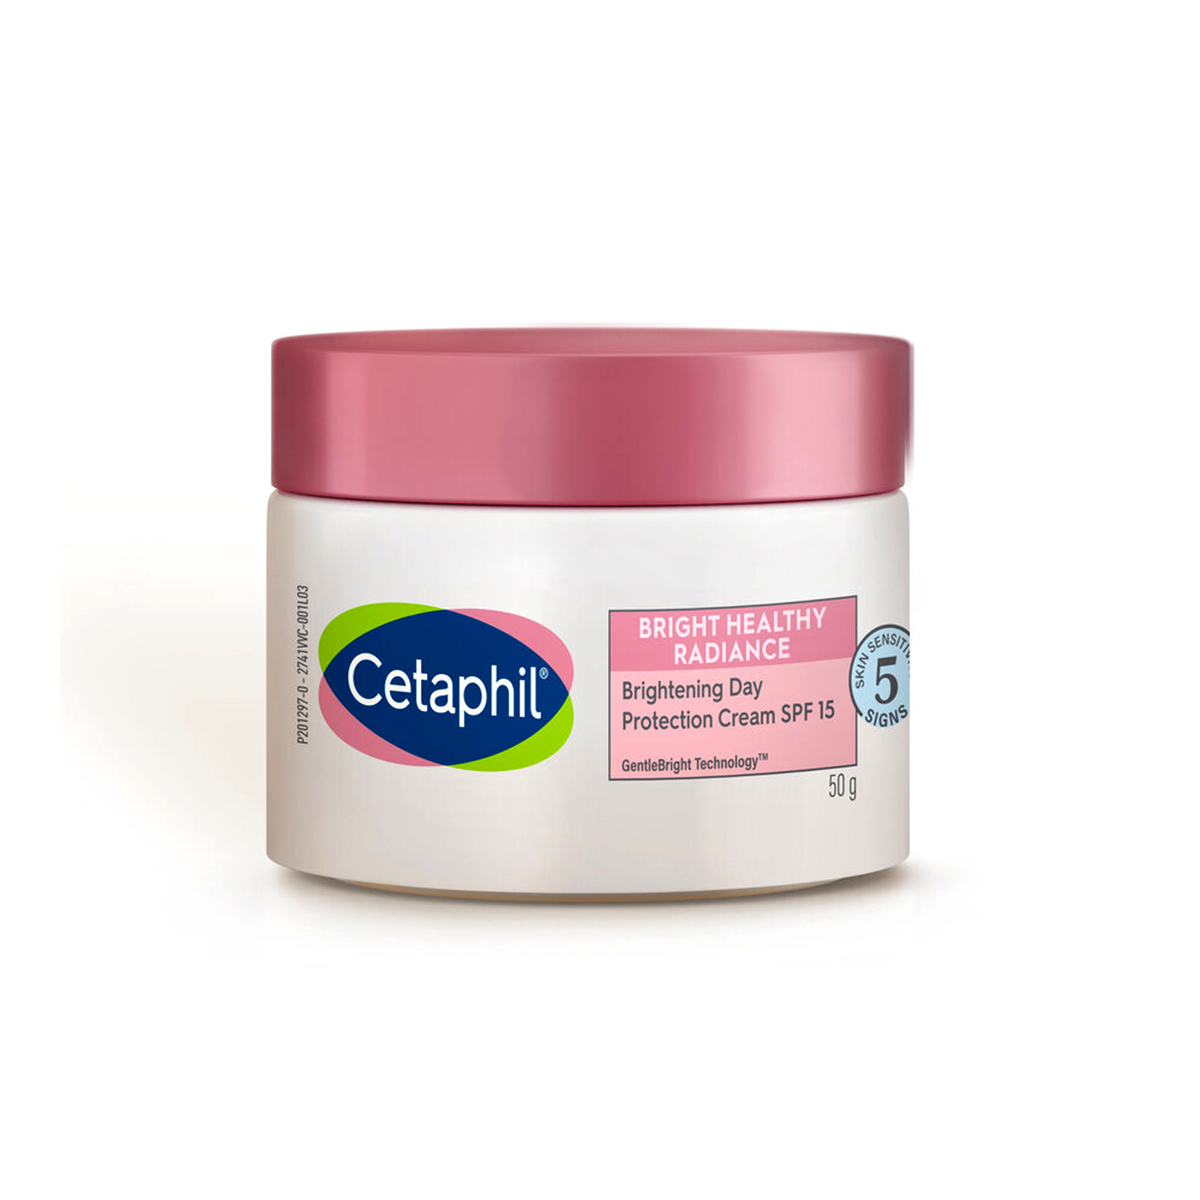 Cetaphil Brightening Day Protection Cream SPF15 50g